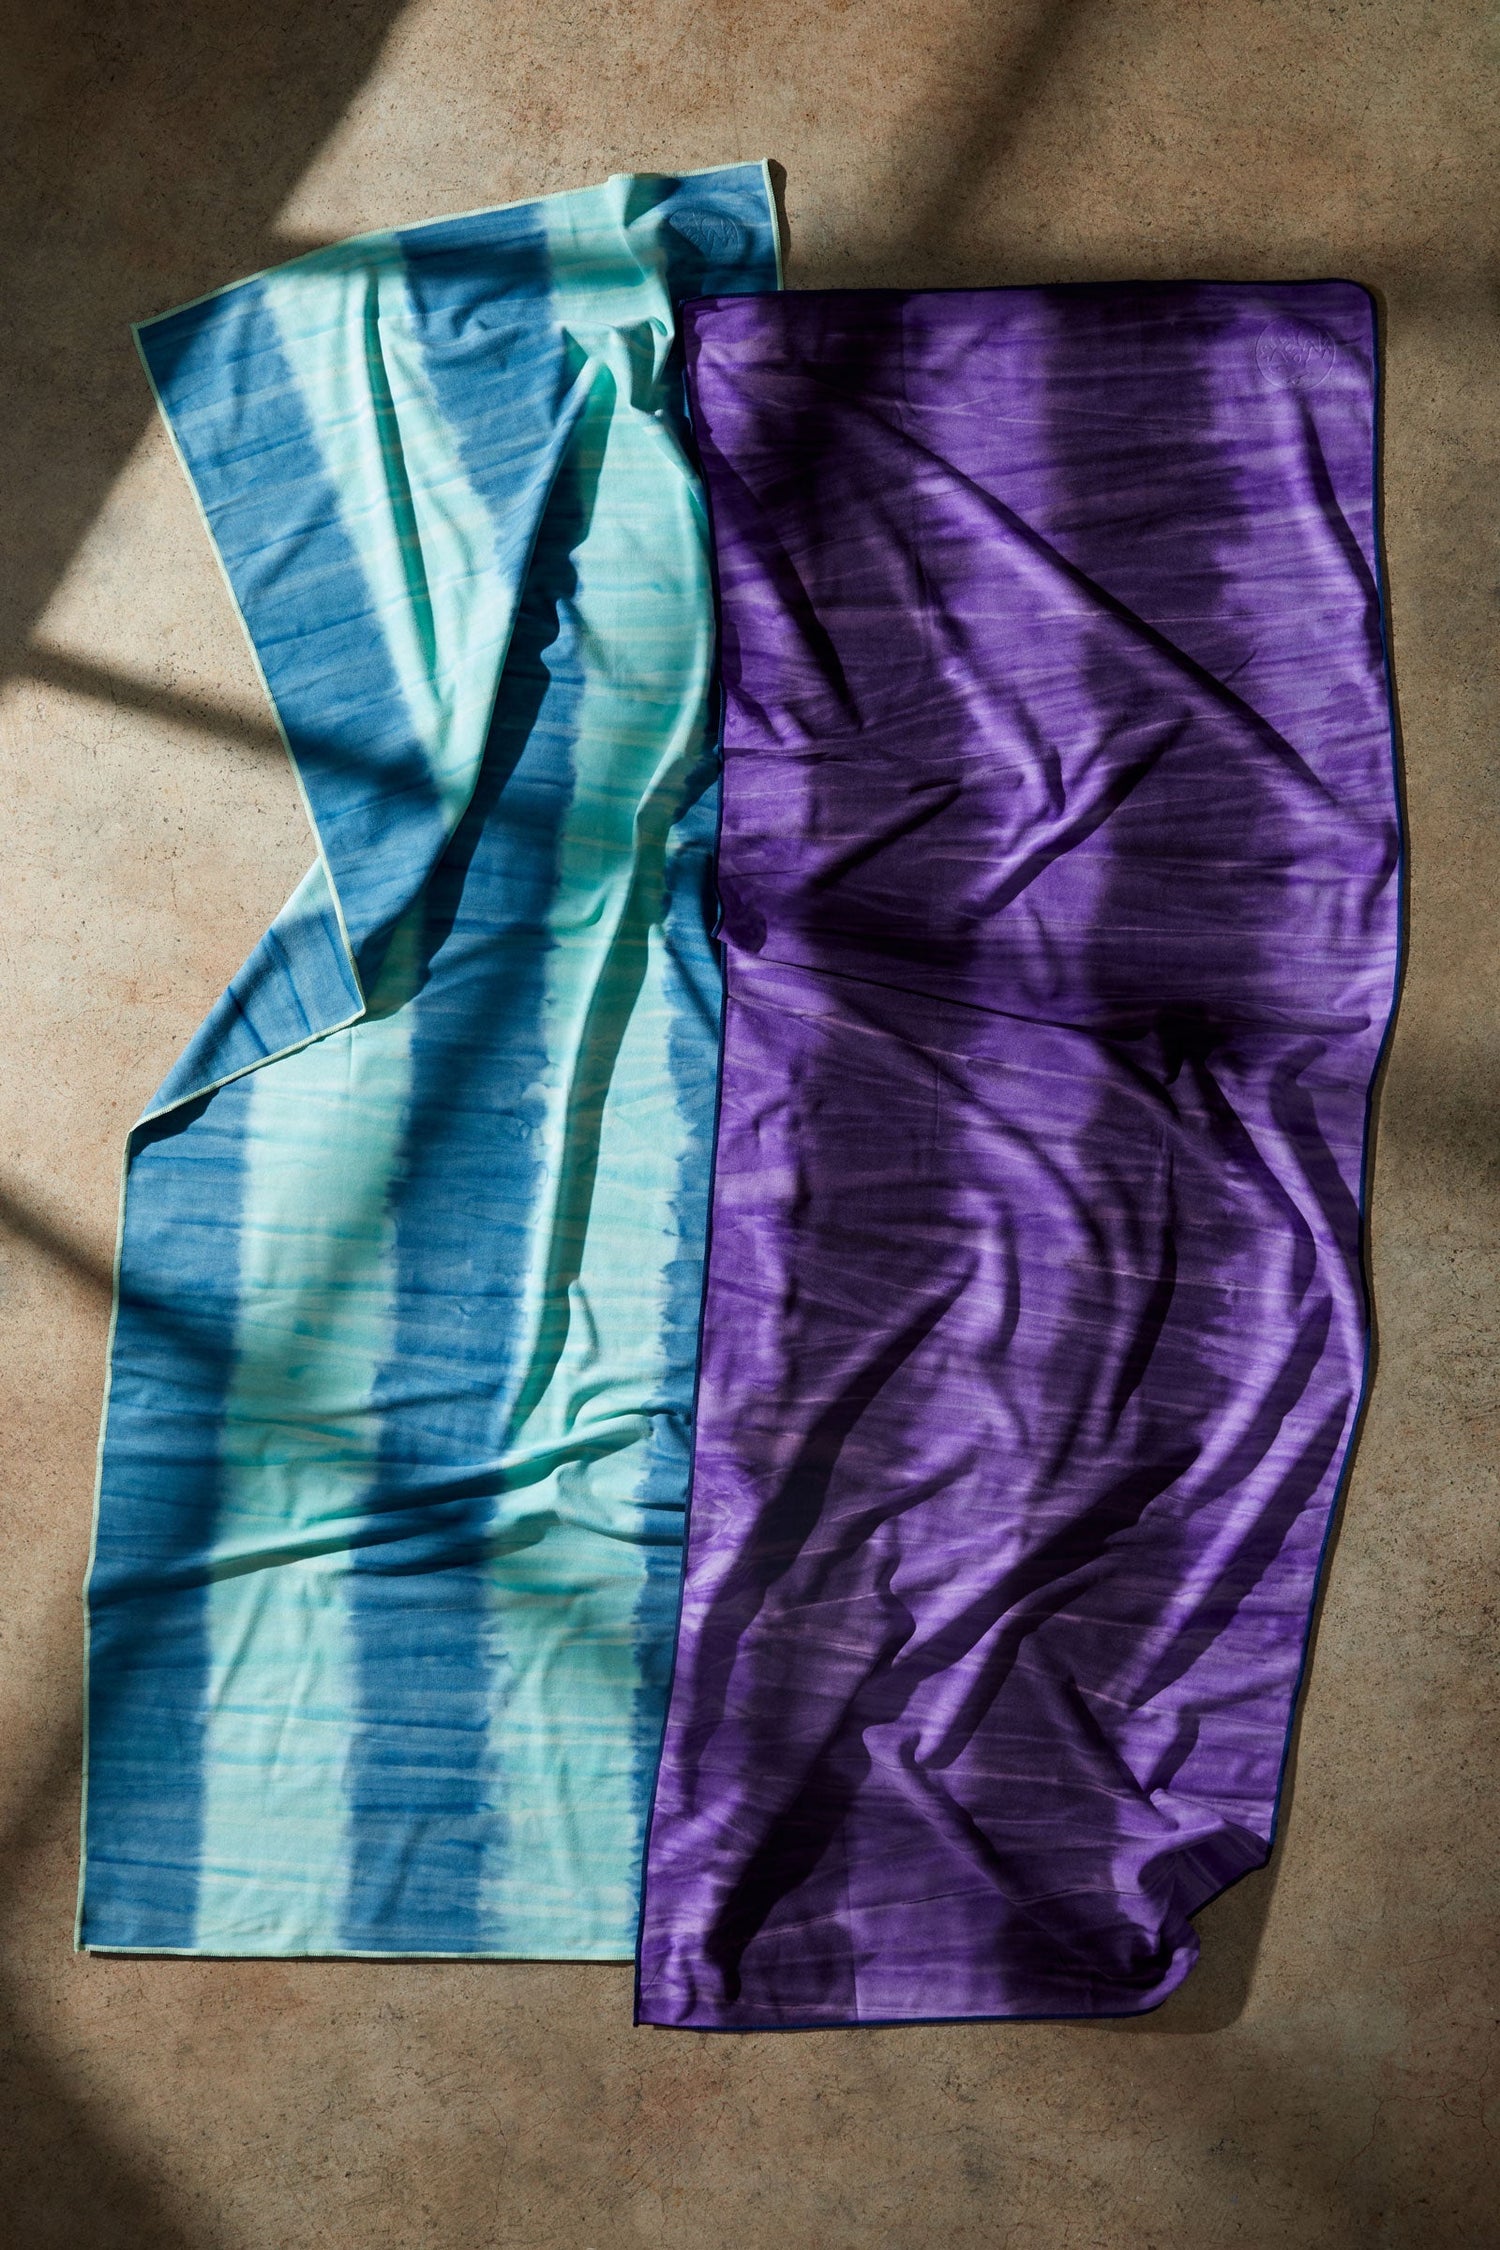 Khăn tập yoga Manduka EQUA TOWELS